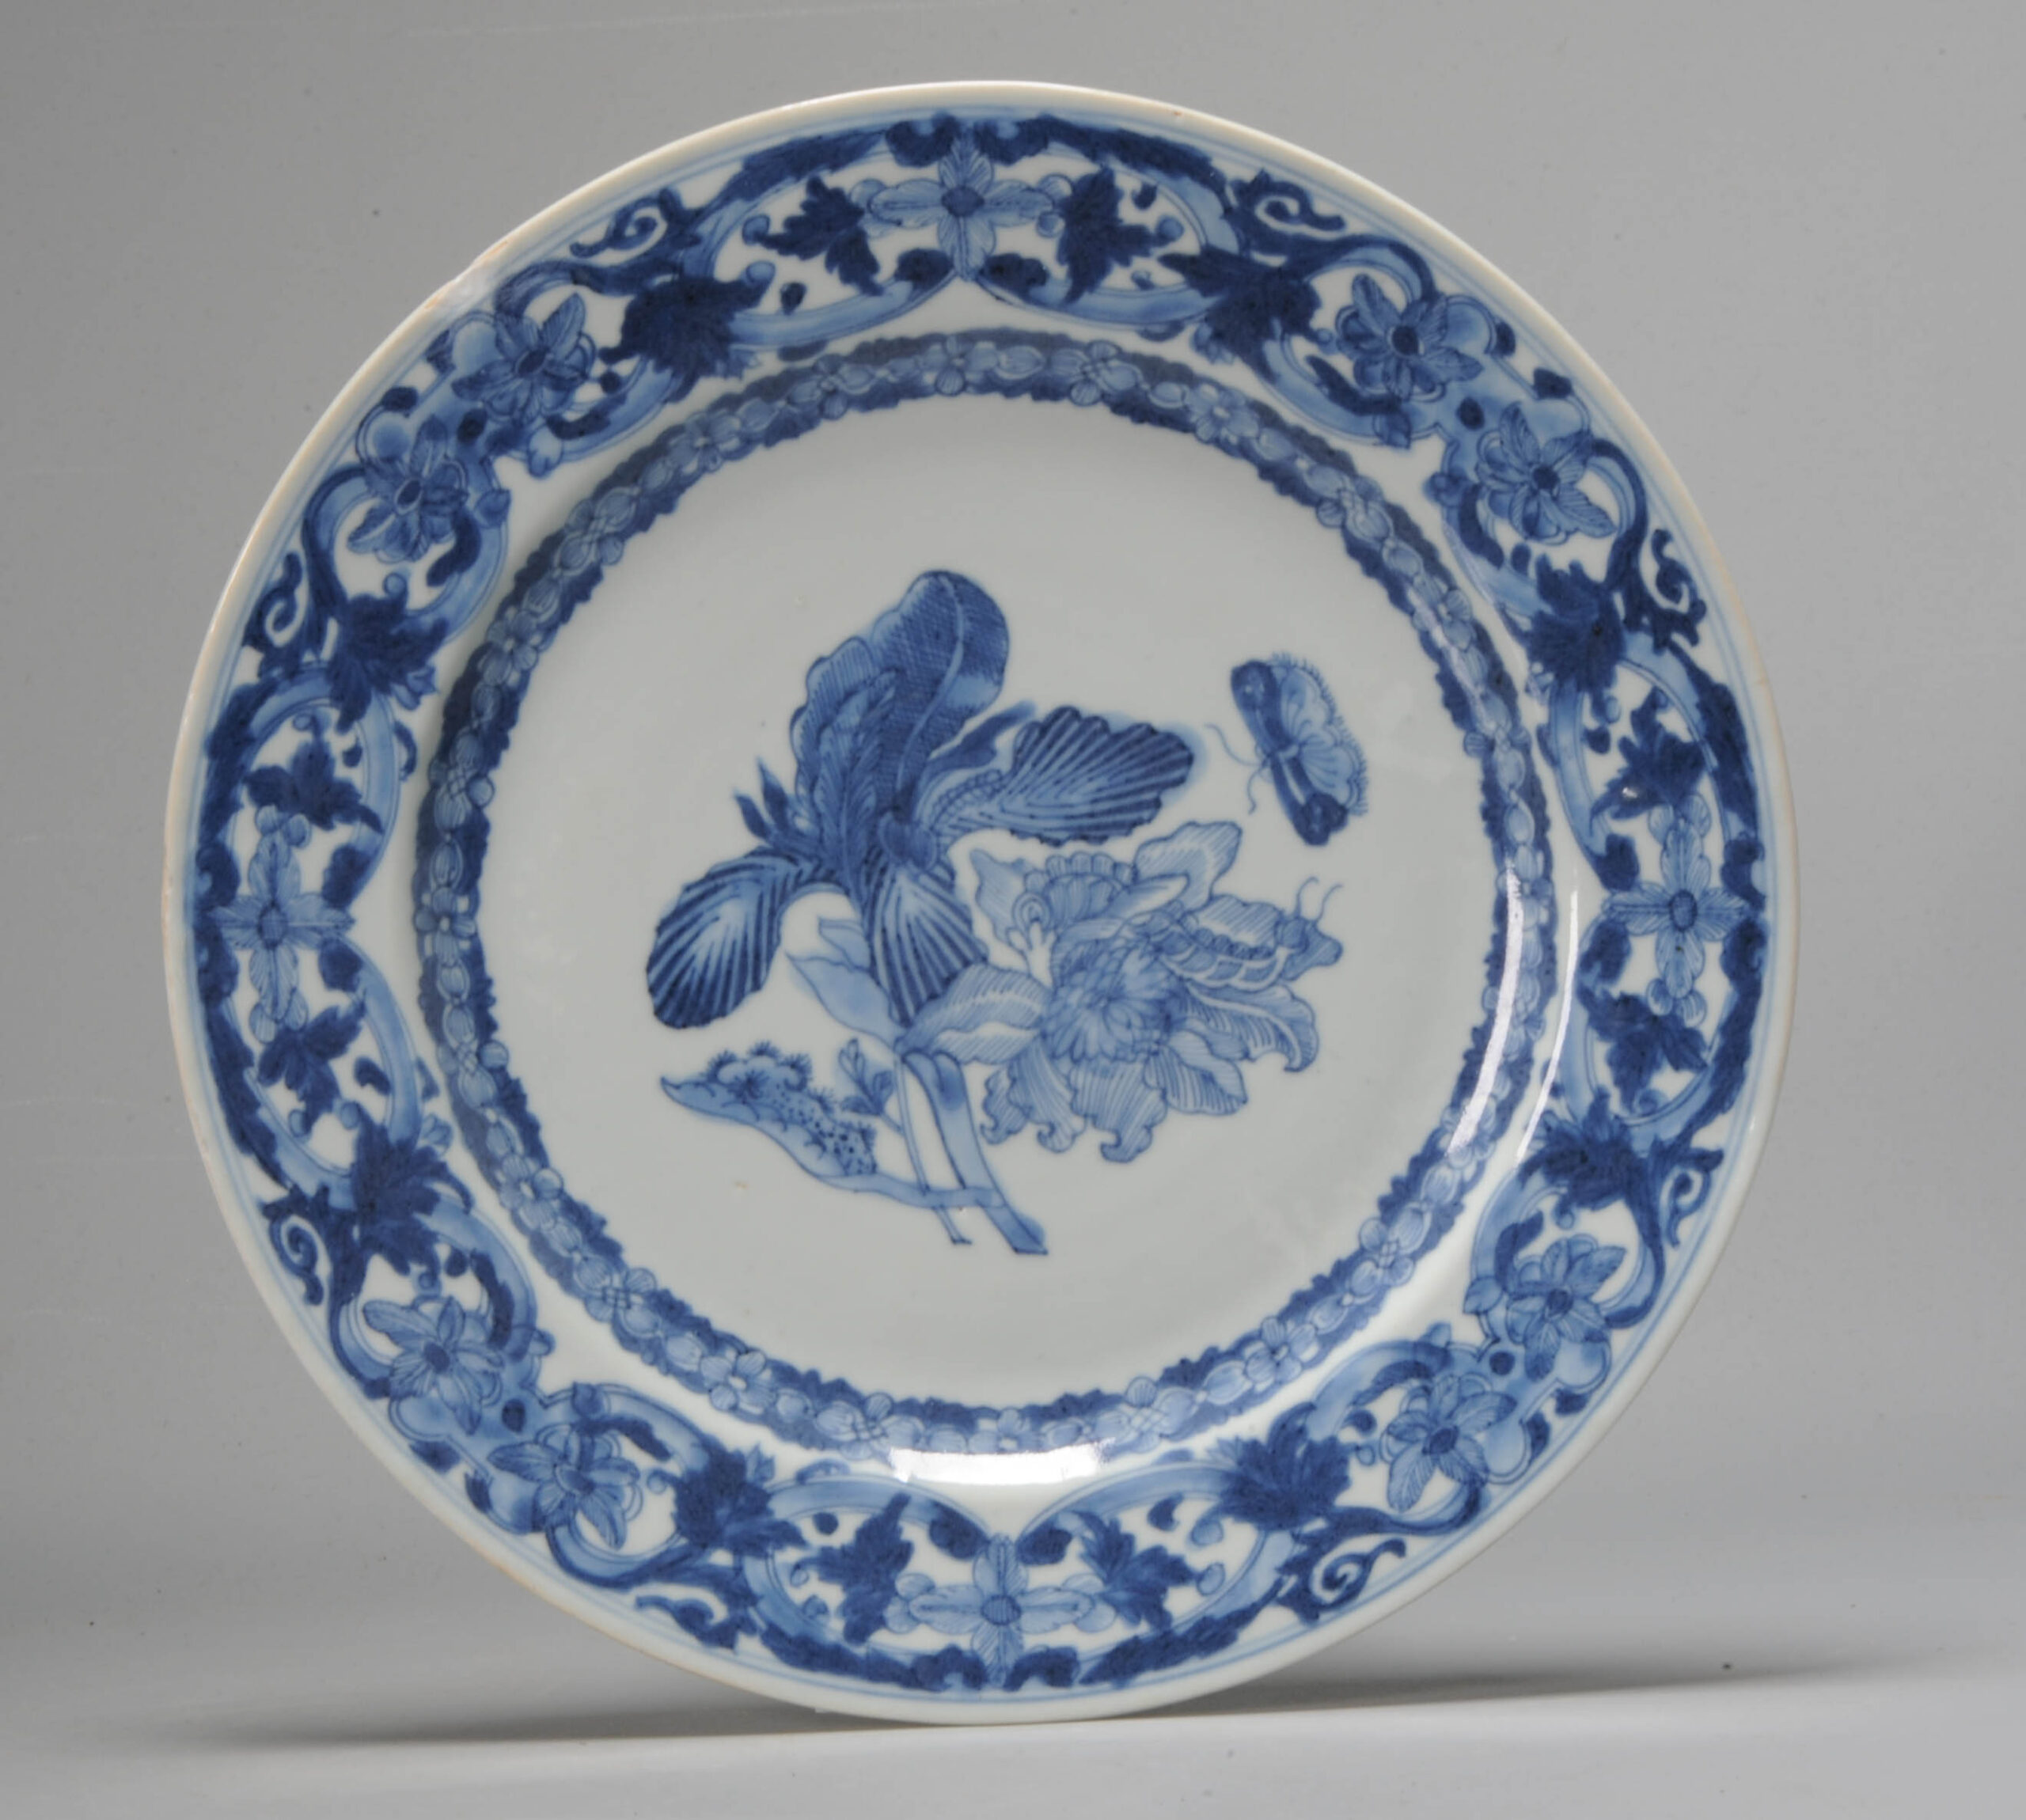 Antique Cobalt Blue Dish 18C Floral decoration Maria Sibylla Merian Chinese porcelain